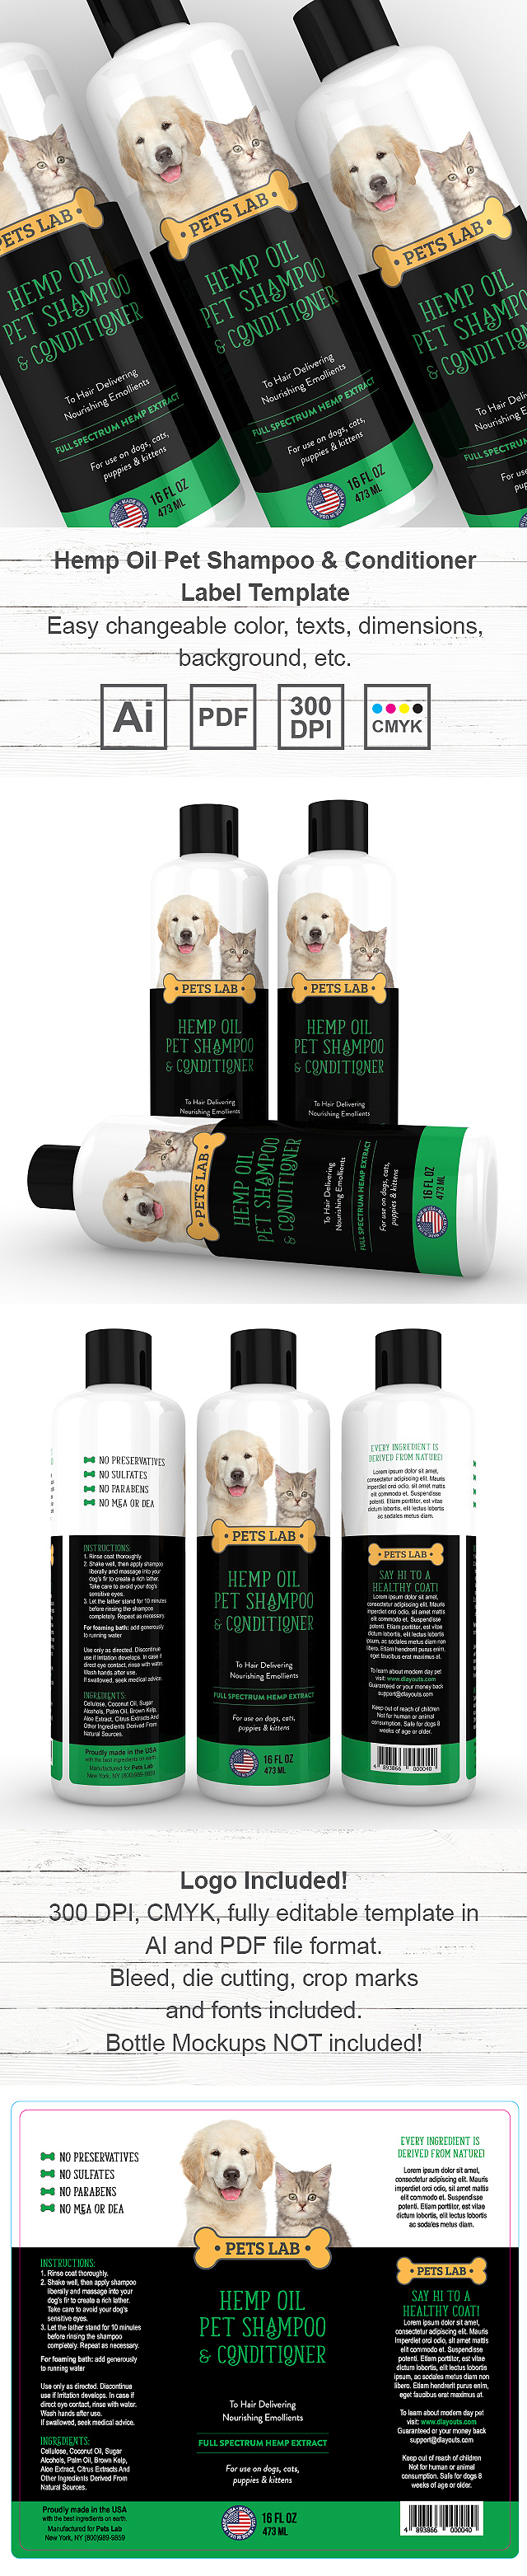 Hemp Oil Pet Shampoo & Conditioner Label Template